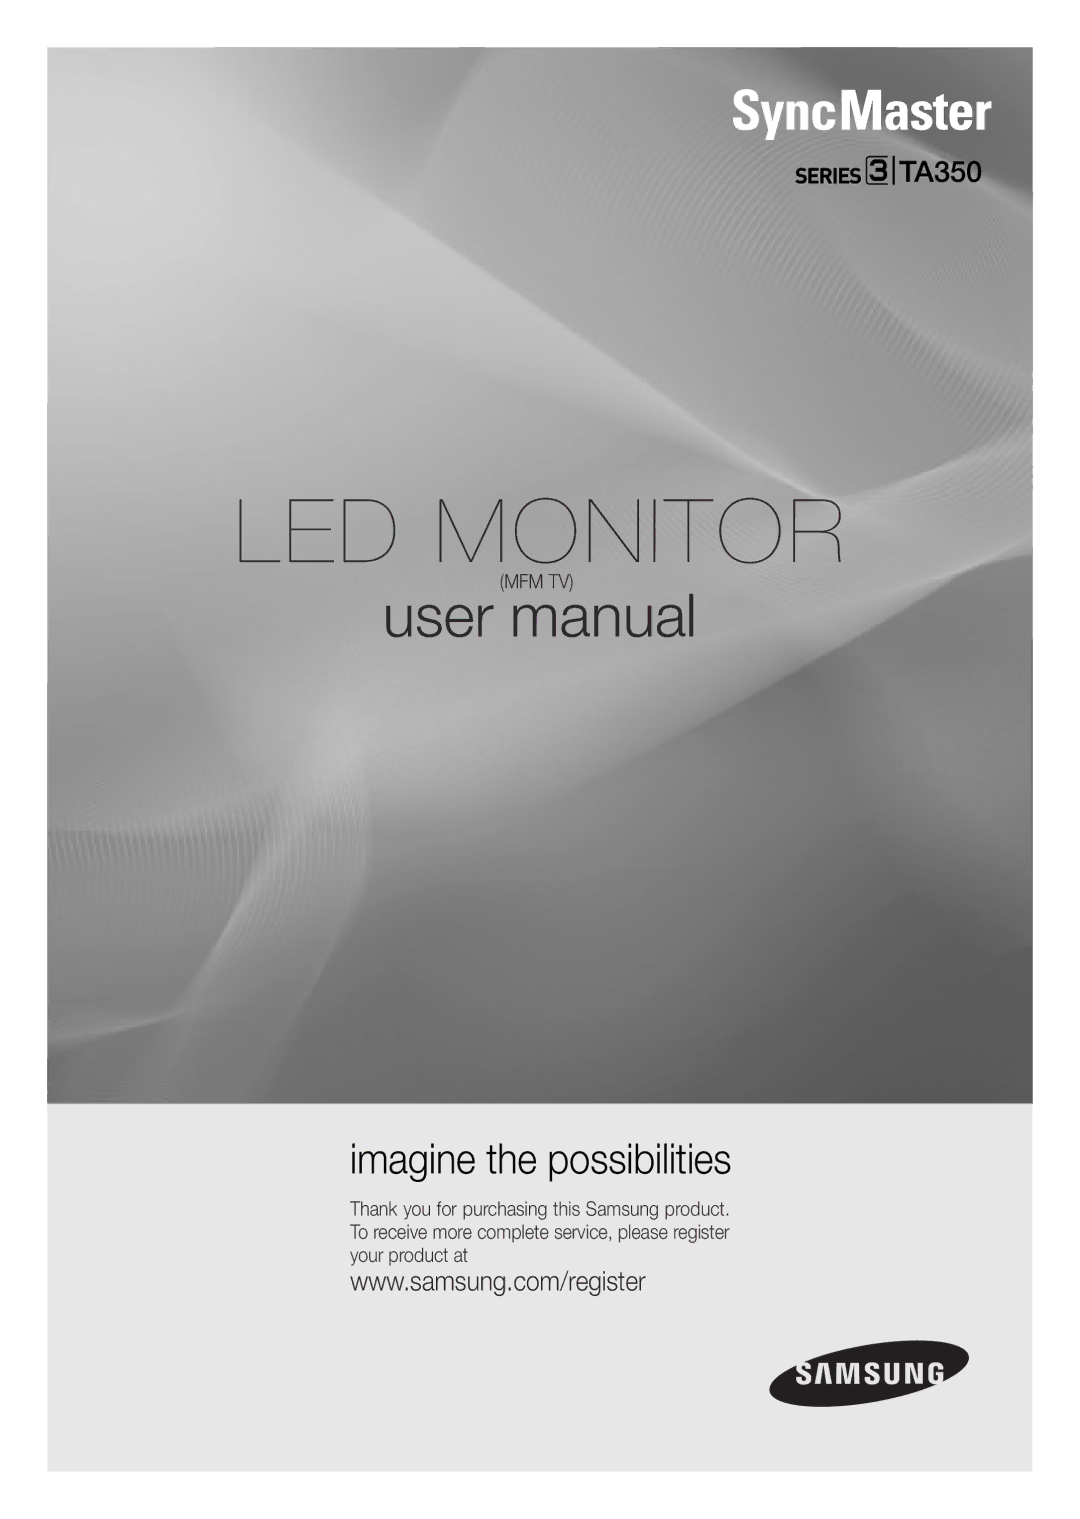 Samsung LT23A350MO/SM, LT23A350EW/EN, LT23A350EW/SM, LT23A350MR/NG manual LED Monitor, Imagine the possibilities 